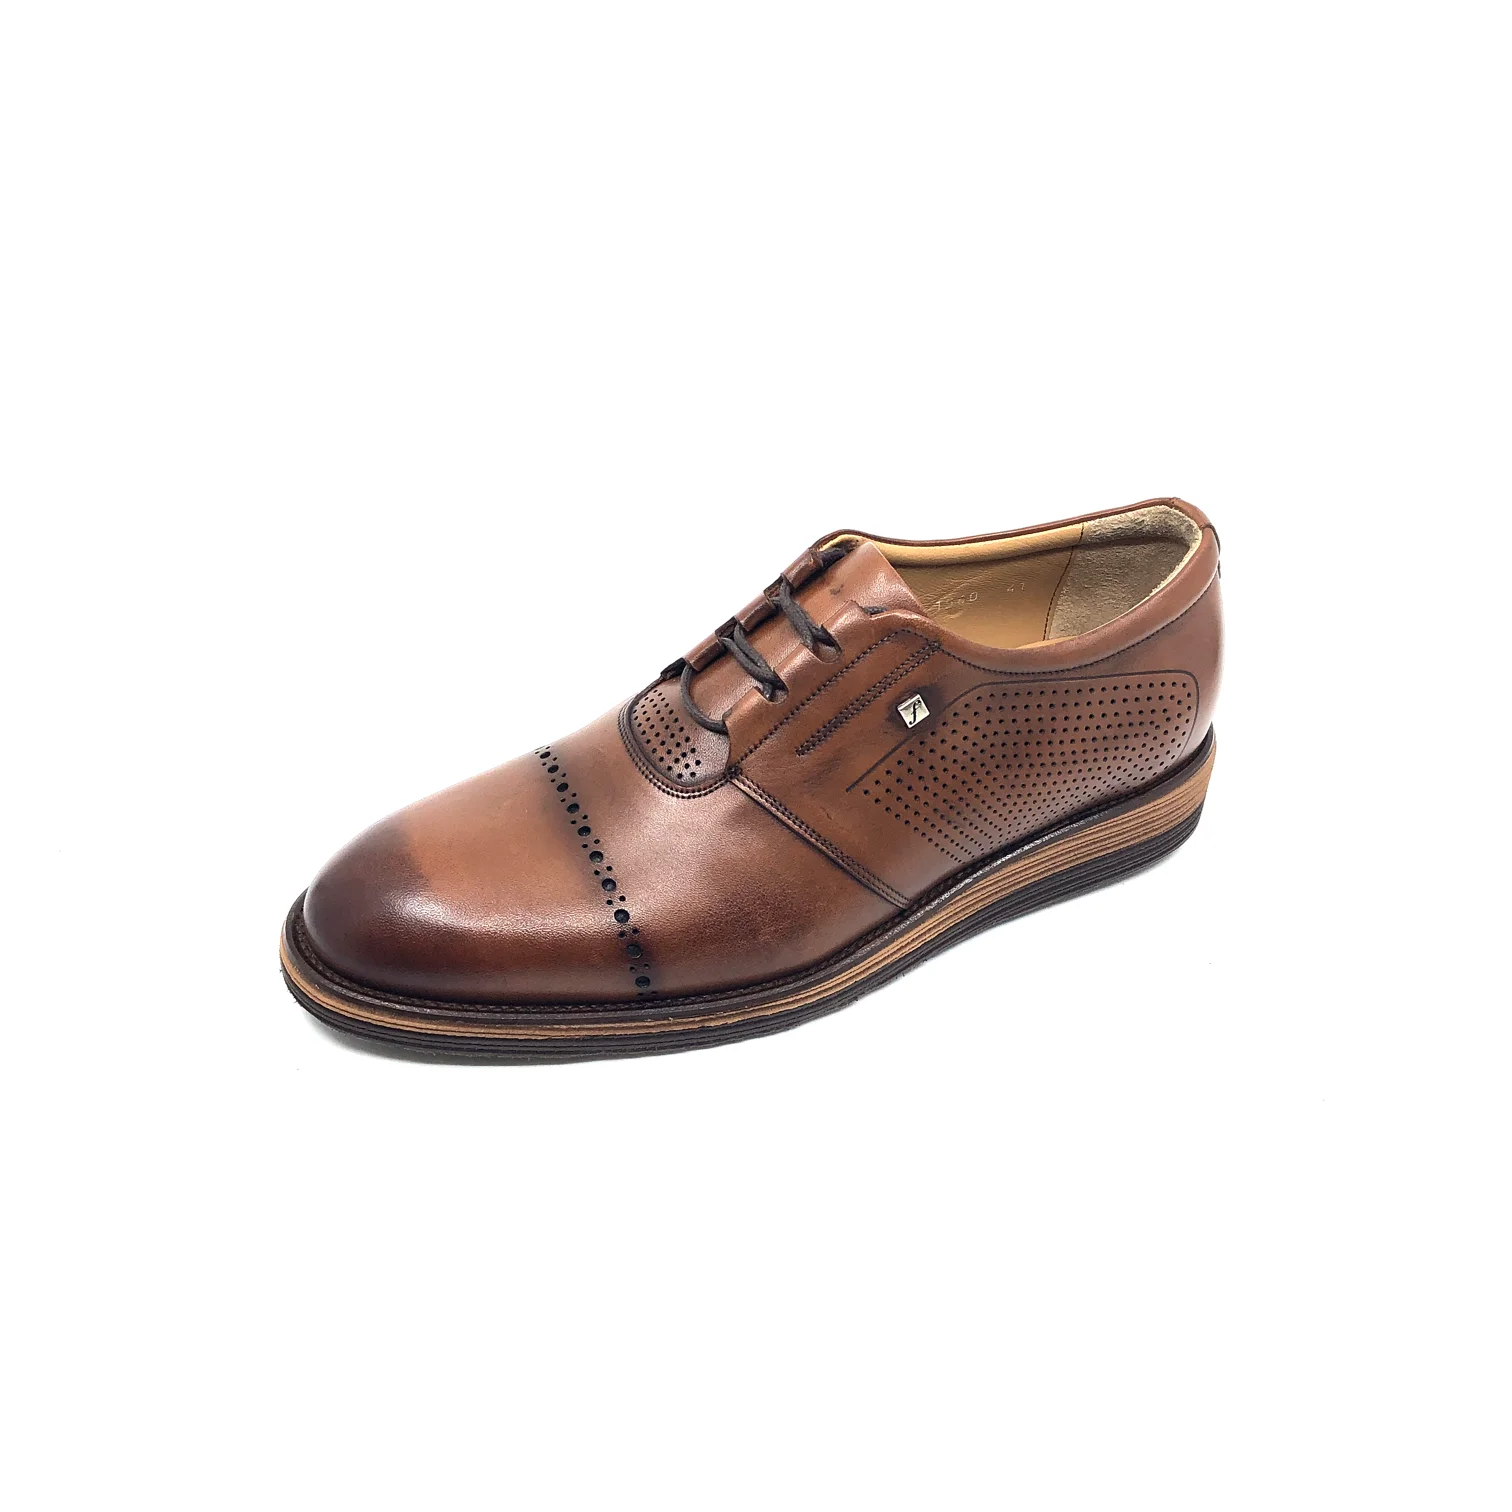 

Fosco Lace Up Men's Classic Shoes %100 Genuine Leather Tan-Brown Colour Eva Sole